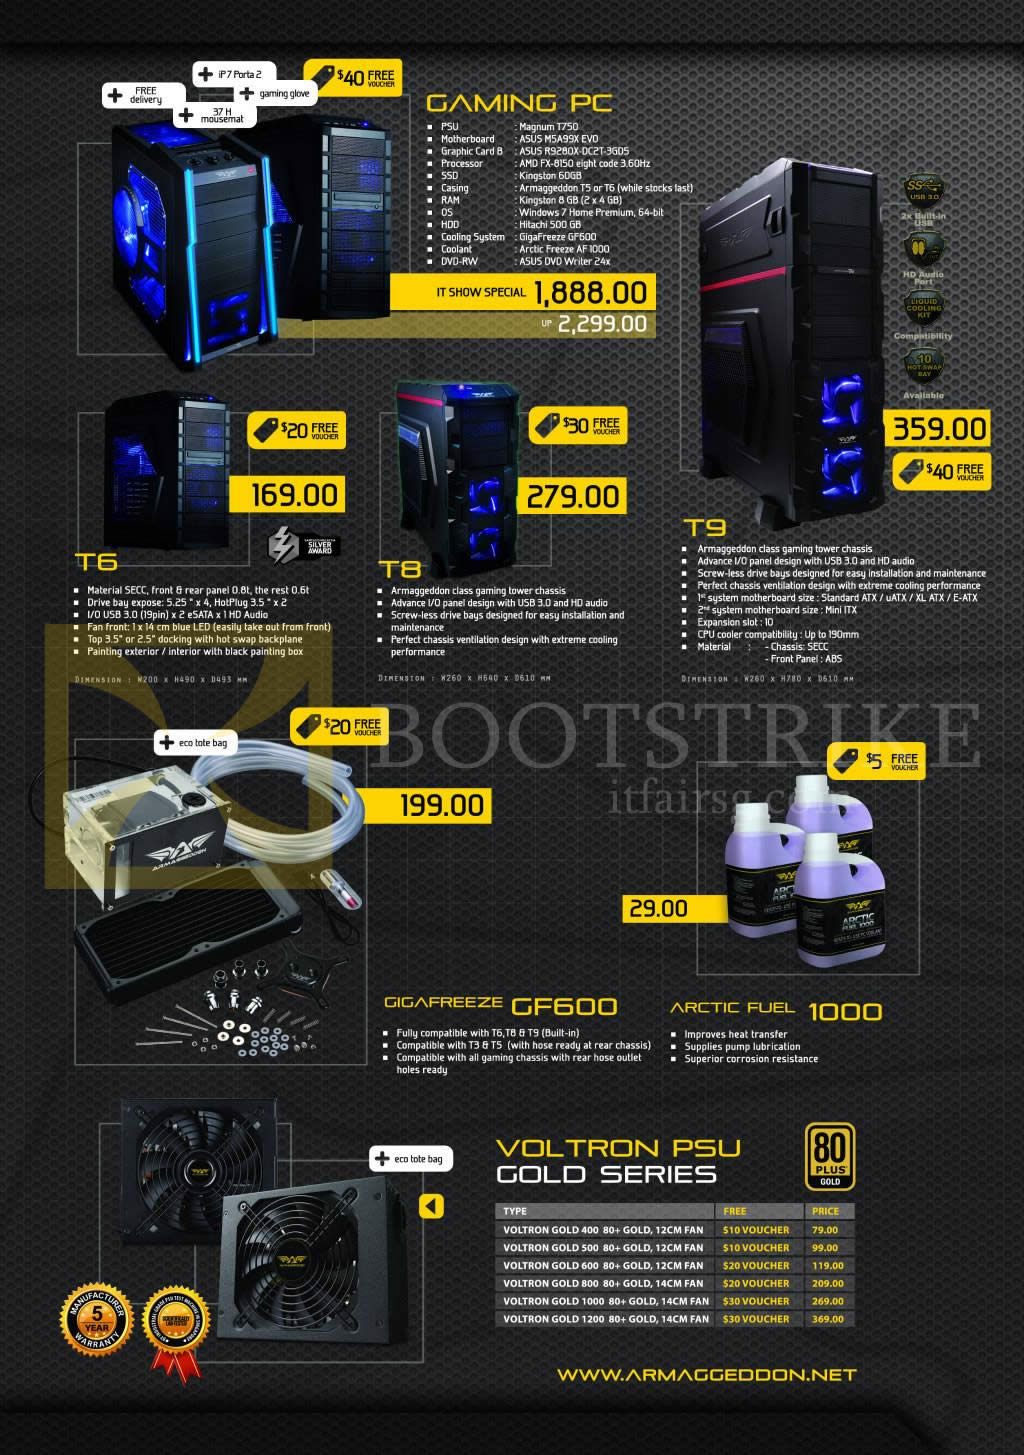 IT SHOW 2014 price list image brochure of Leap Frog Armaggeddon Desktop PCs Gaming, T6 T8 T9, Gigafreeze, Arctic Fuel, Voltron PSU Gold Series